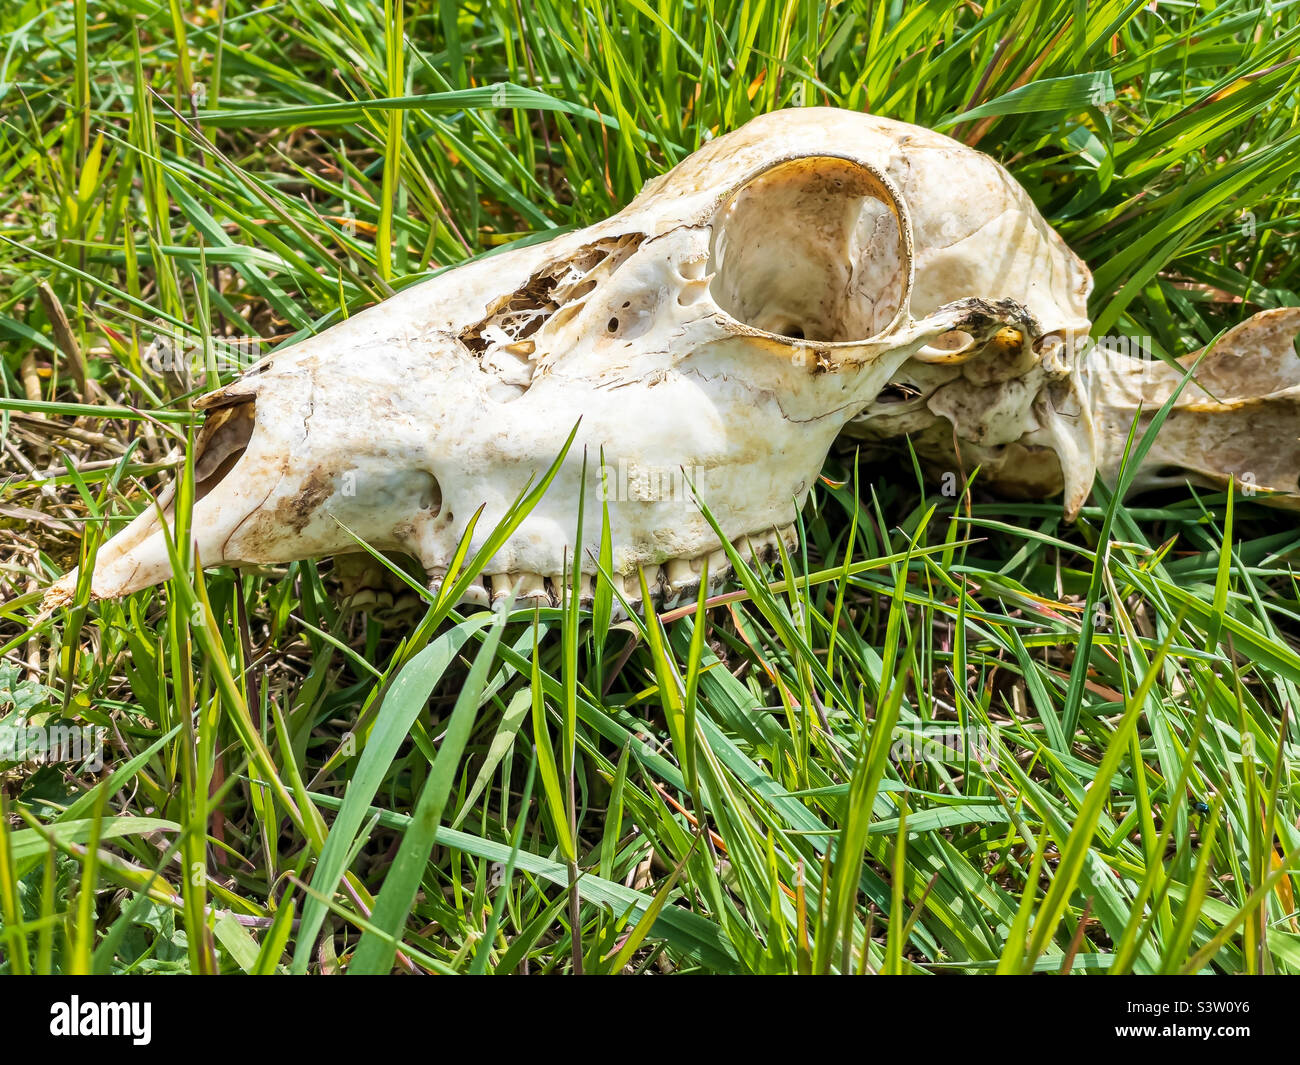 Skull of a muntjac deer Stock Photo